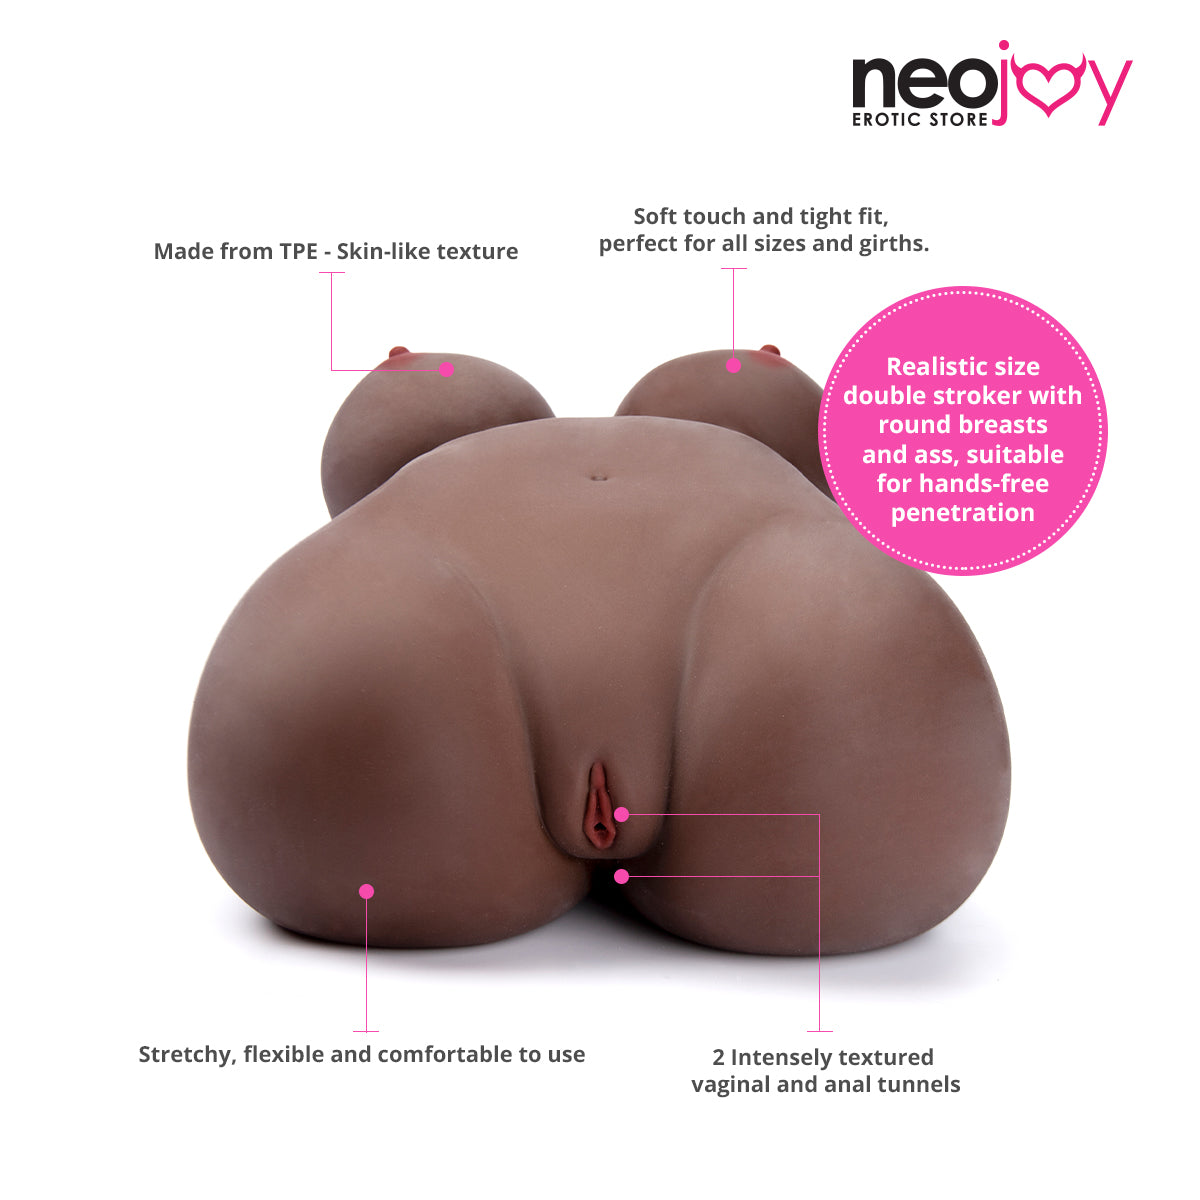 Neojoy - Fantasy Doll 21Kg (Brown)| Large Size Love Doll Torso - TPE - 66cm | NeoDoll